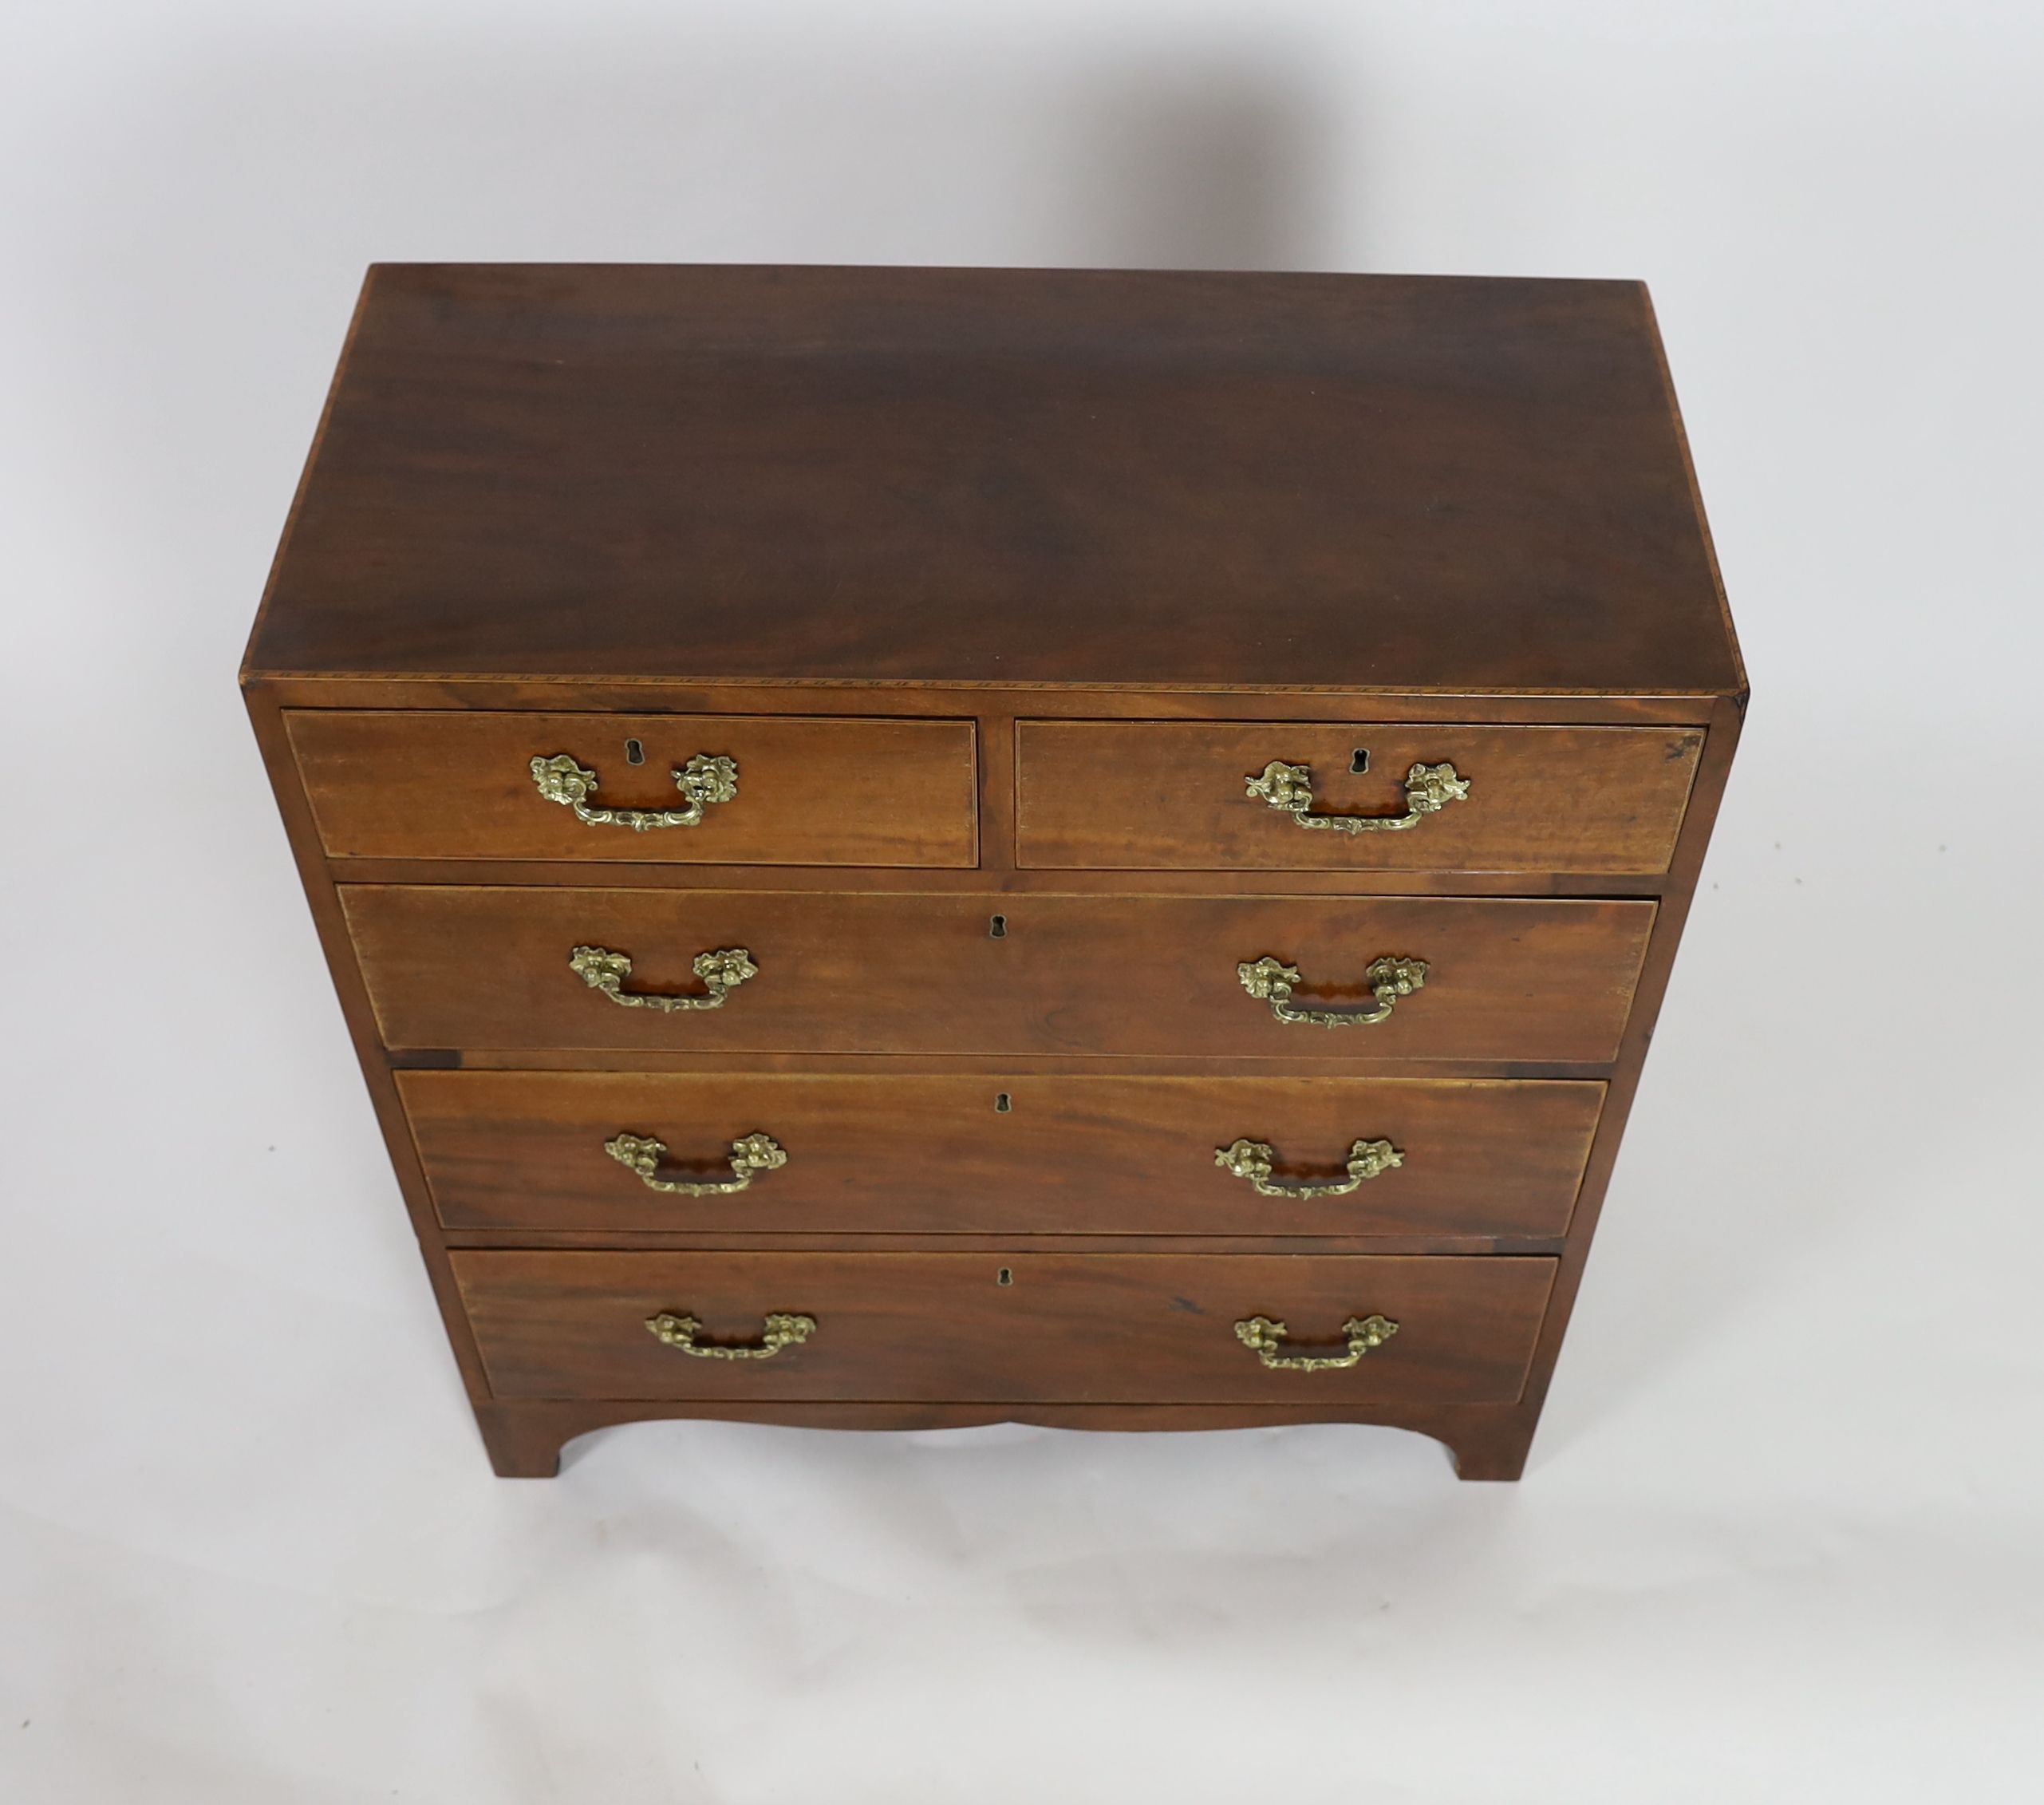 A George III inlaid mahogany chest, width 89cm depth 42cm height 95cm